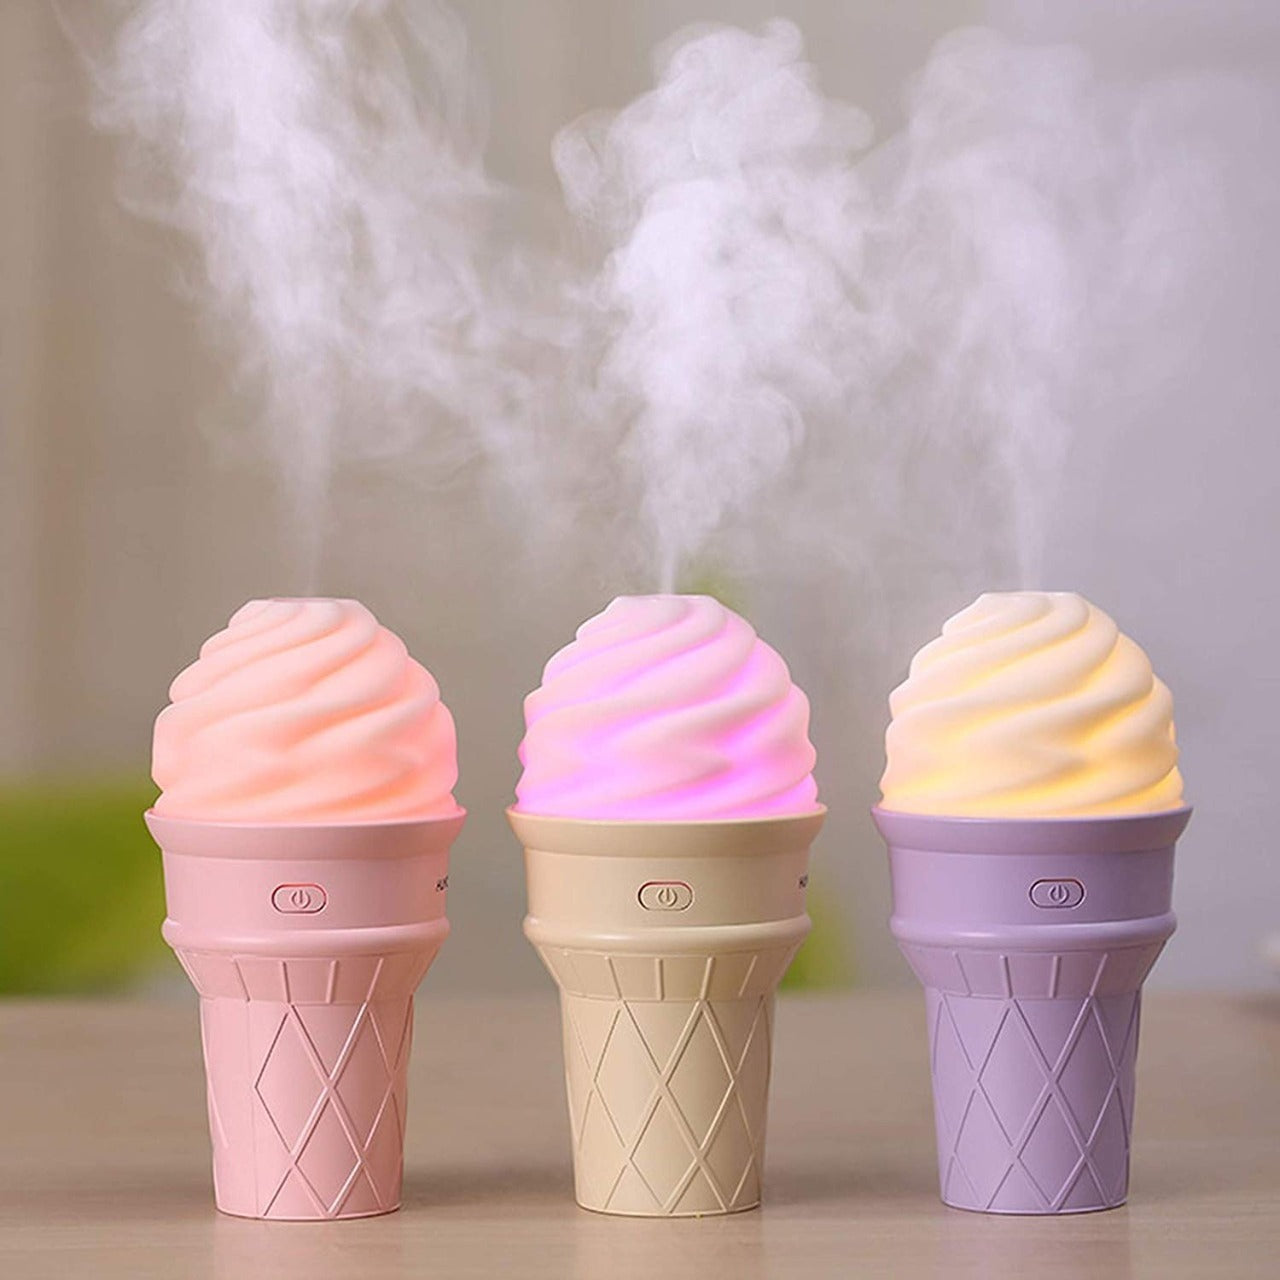 0396 Ice Cream Design LED Humidifier for Freshening Air & Fragrance (Multicoloured)